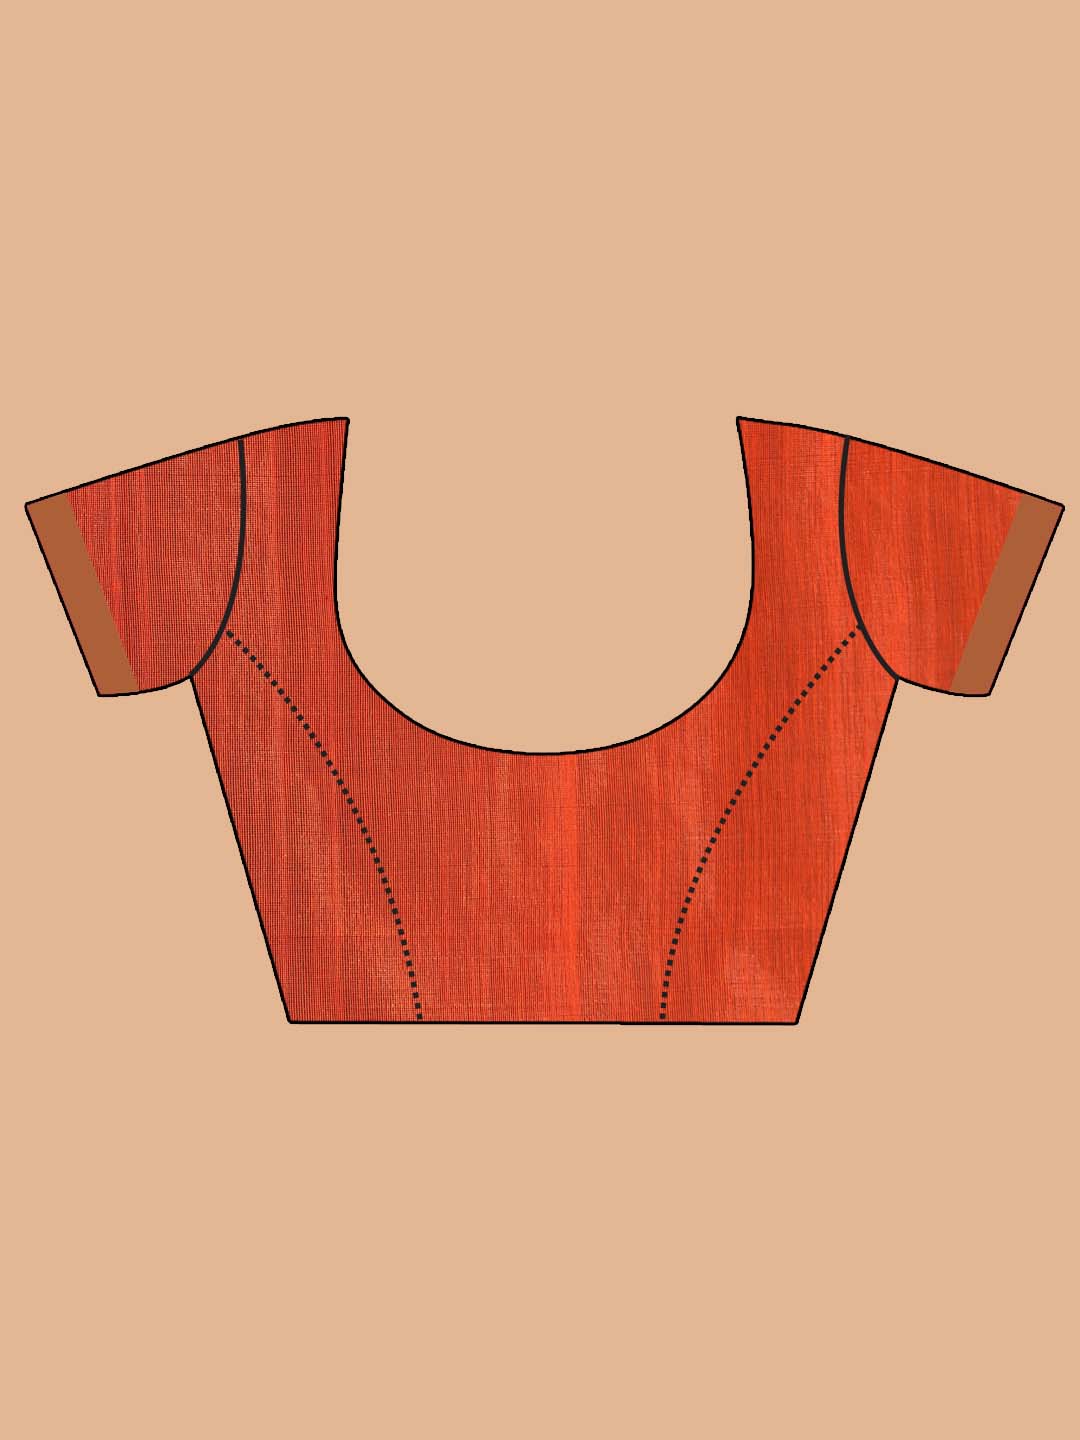 Indethnic Orange Bengal Handloom Cotton Blend Work Saree - Blouse Piece View